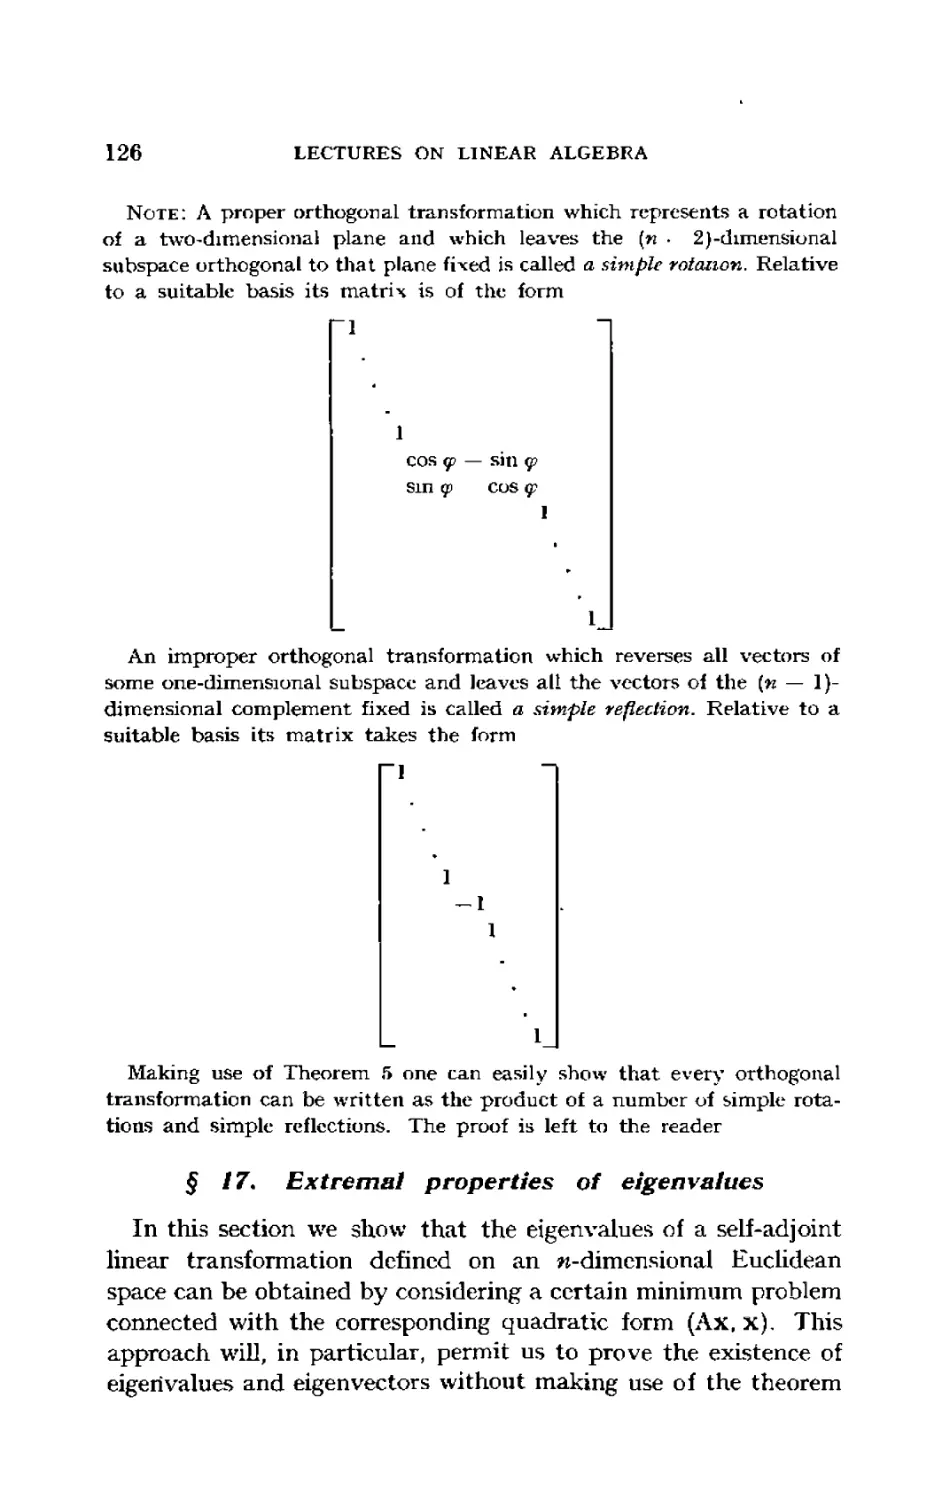 §17. Extremal properties of eigenvalues